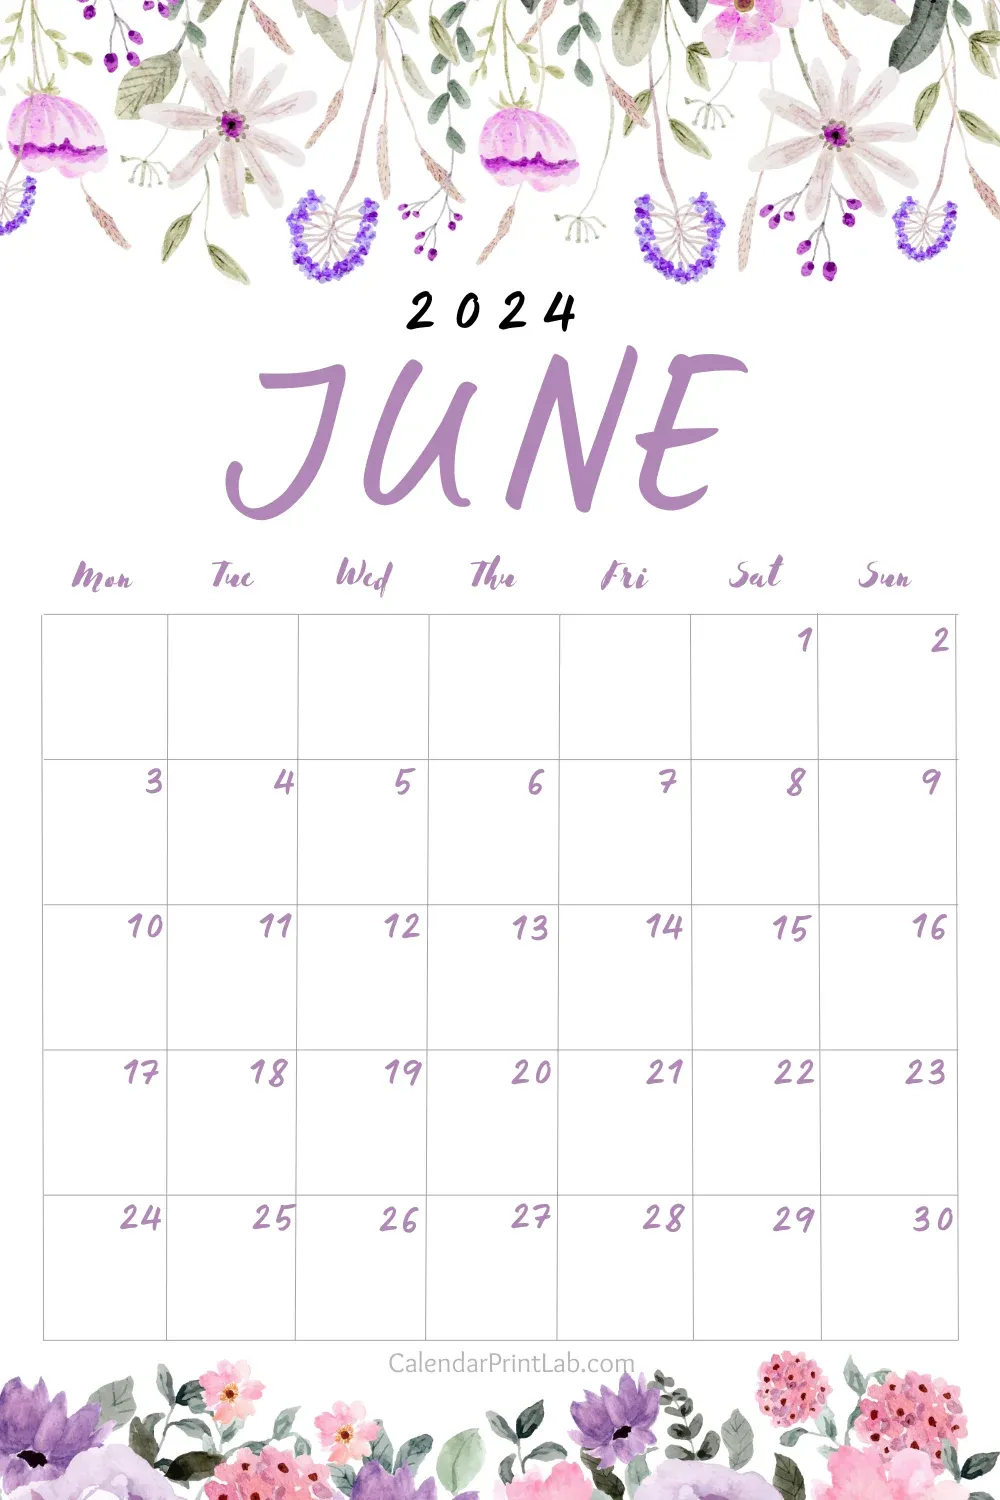 June 2024 Flower Calendar Printable